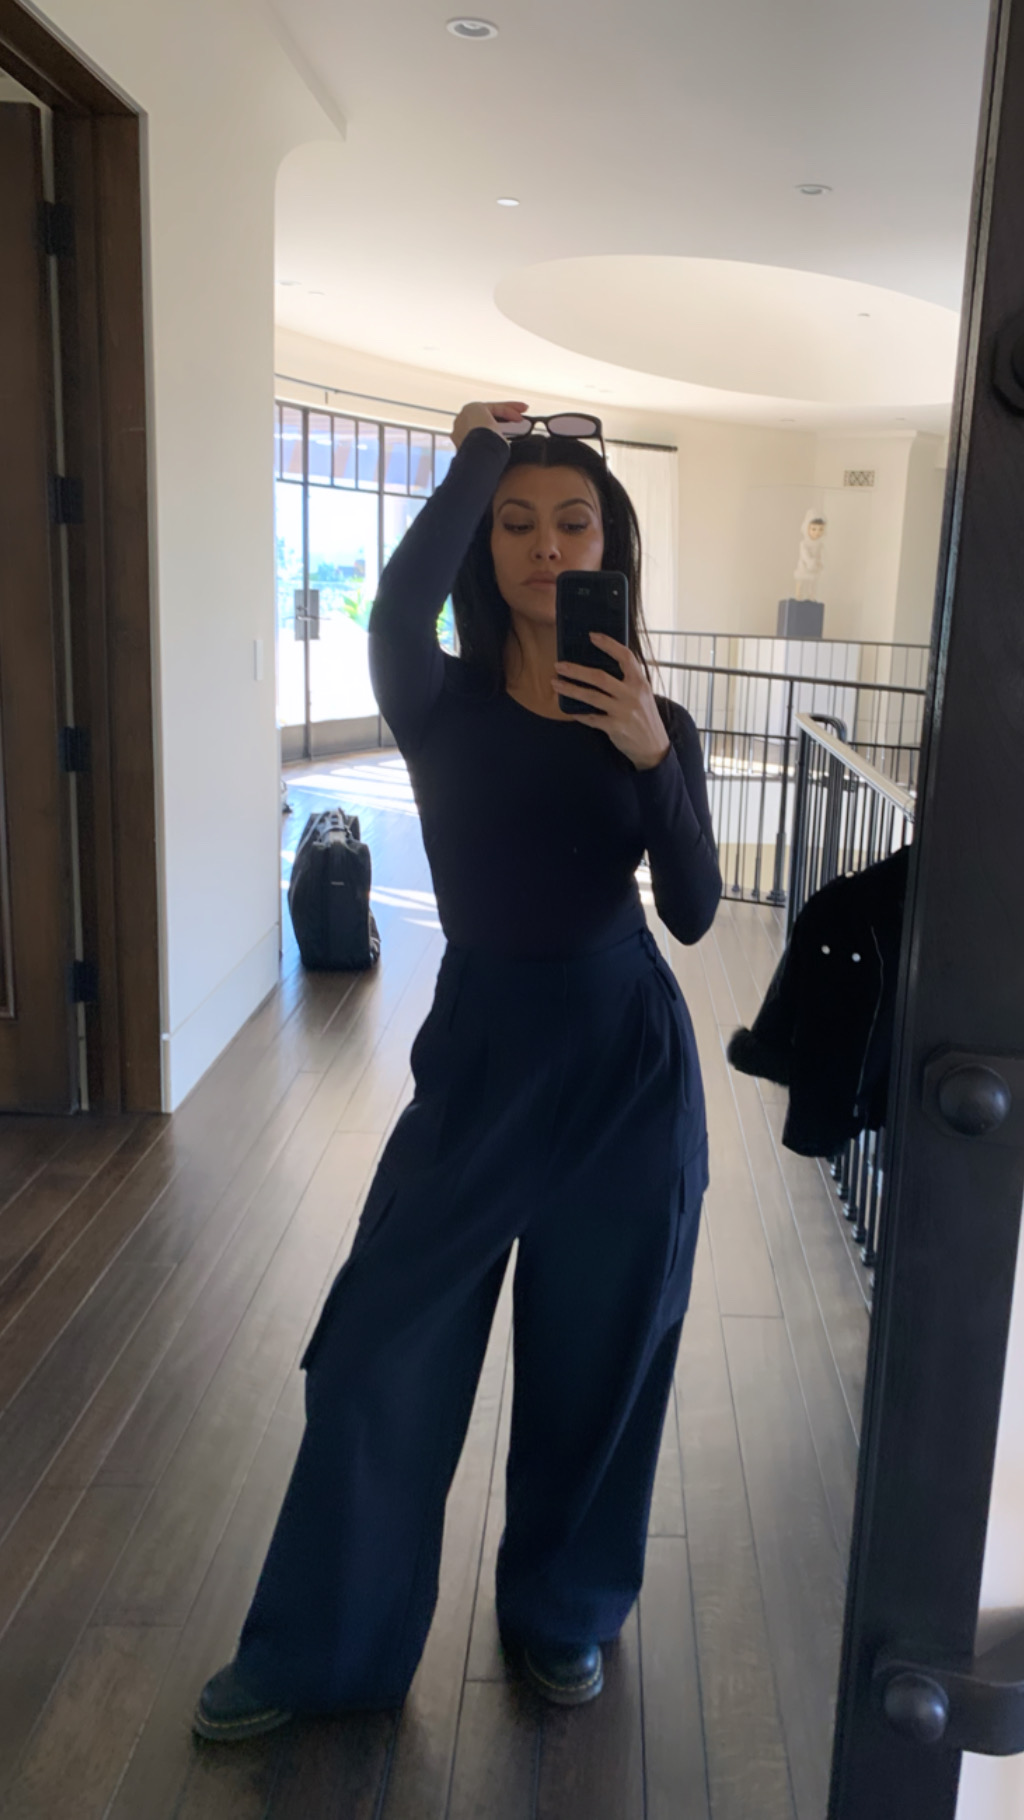 kourtney kardashian taking a mirror selfie